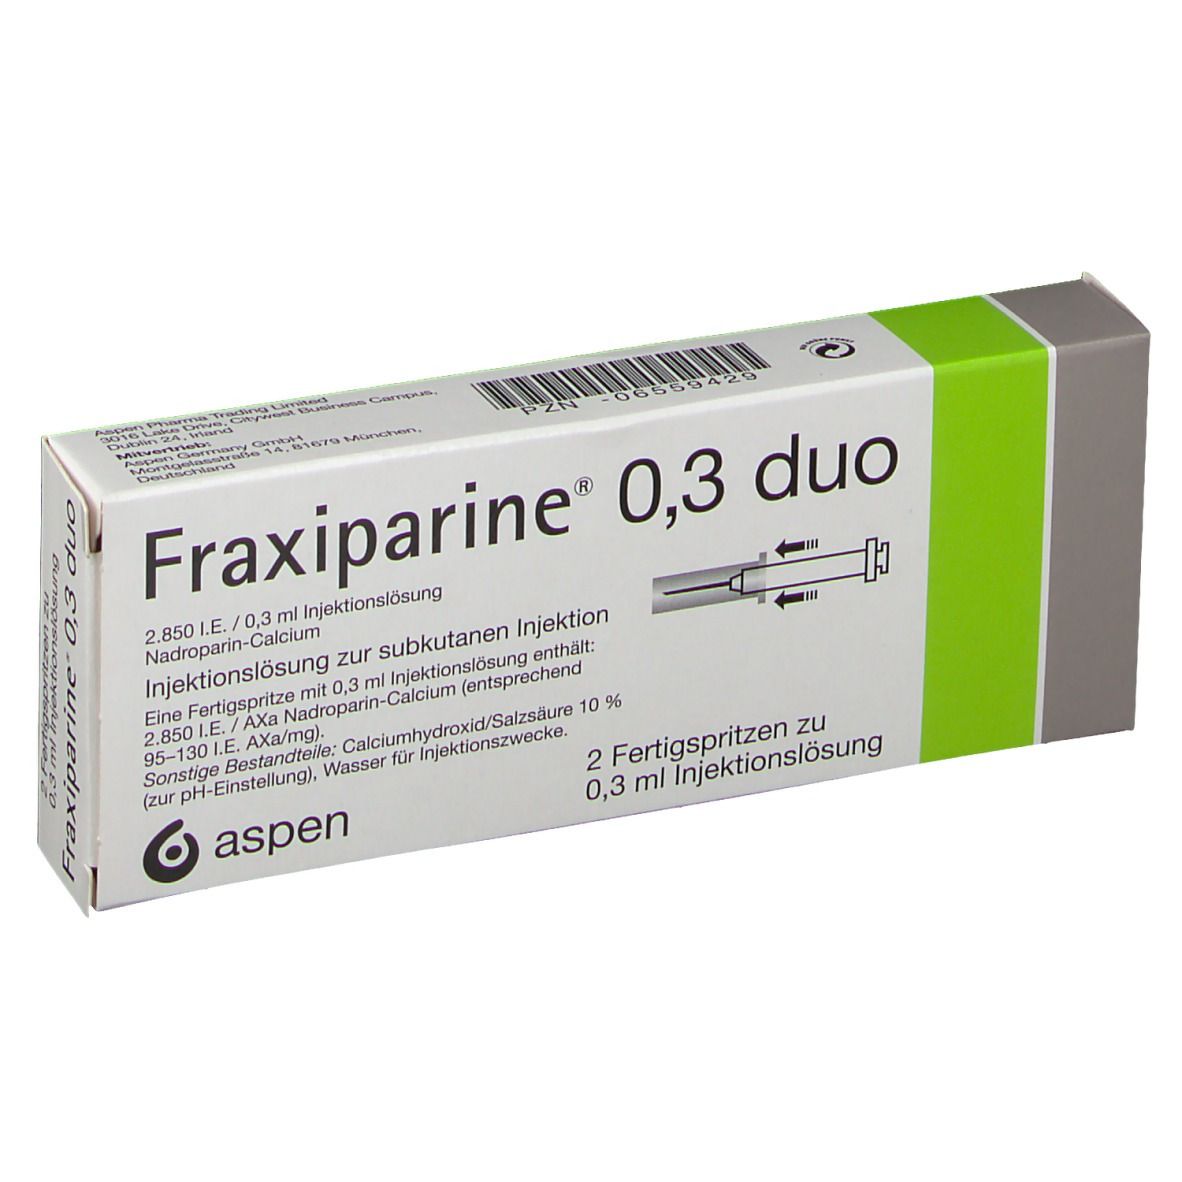 Fraxiparine® 0,3 duo